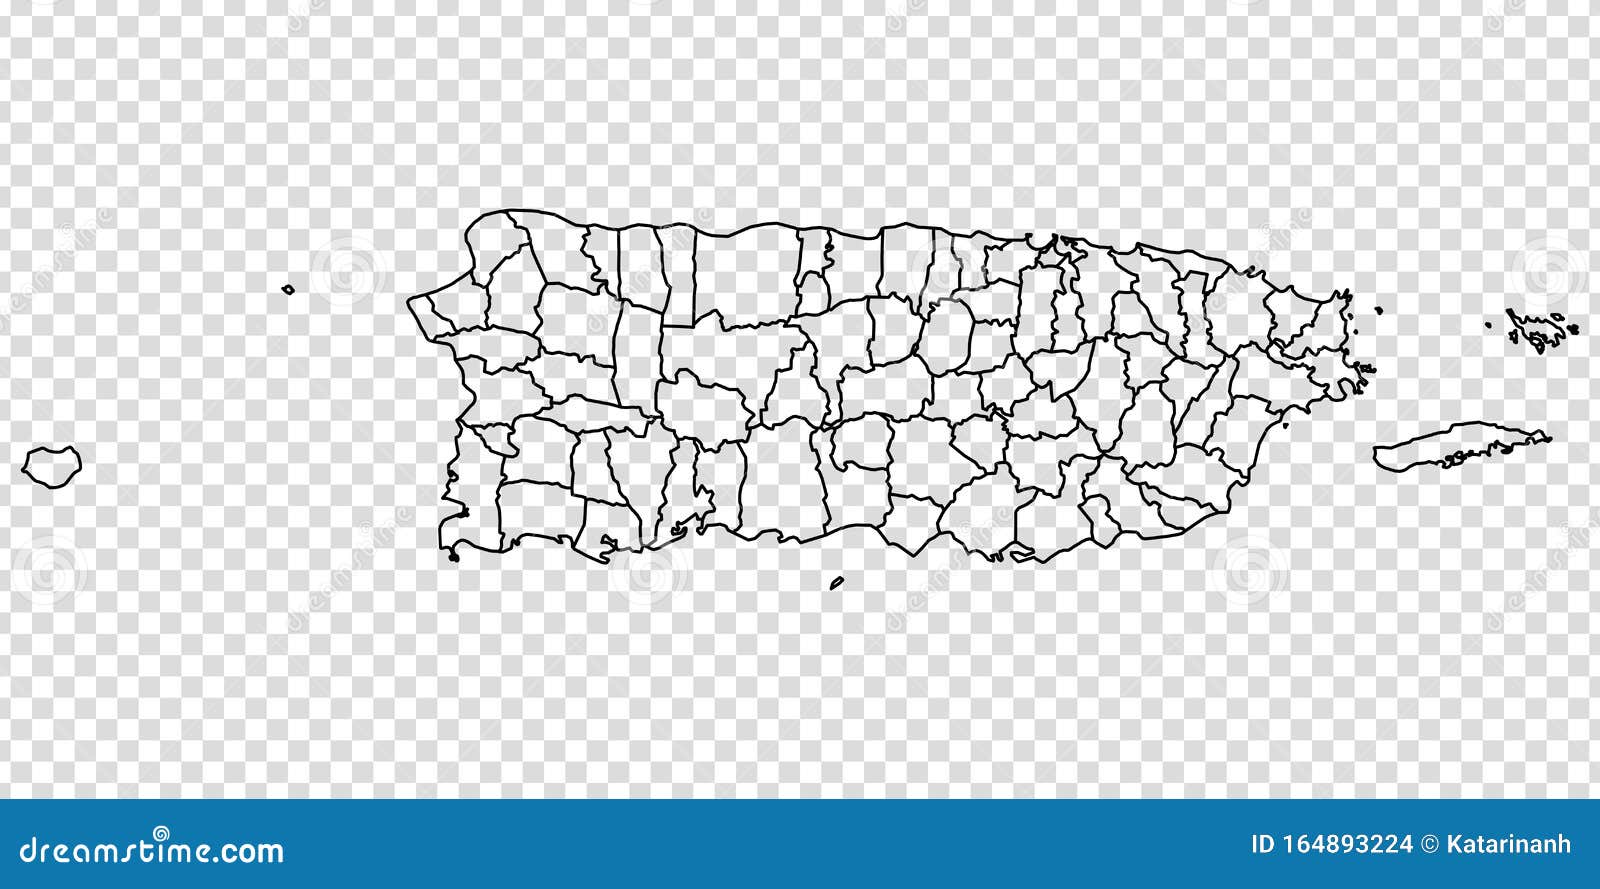 Puerto rico map